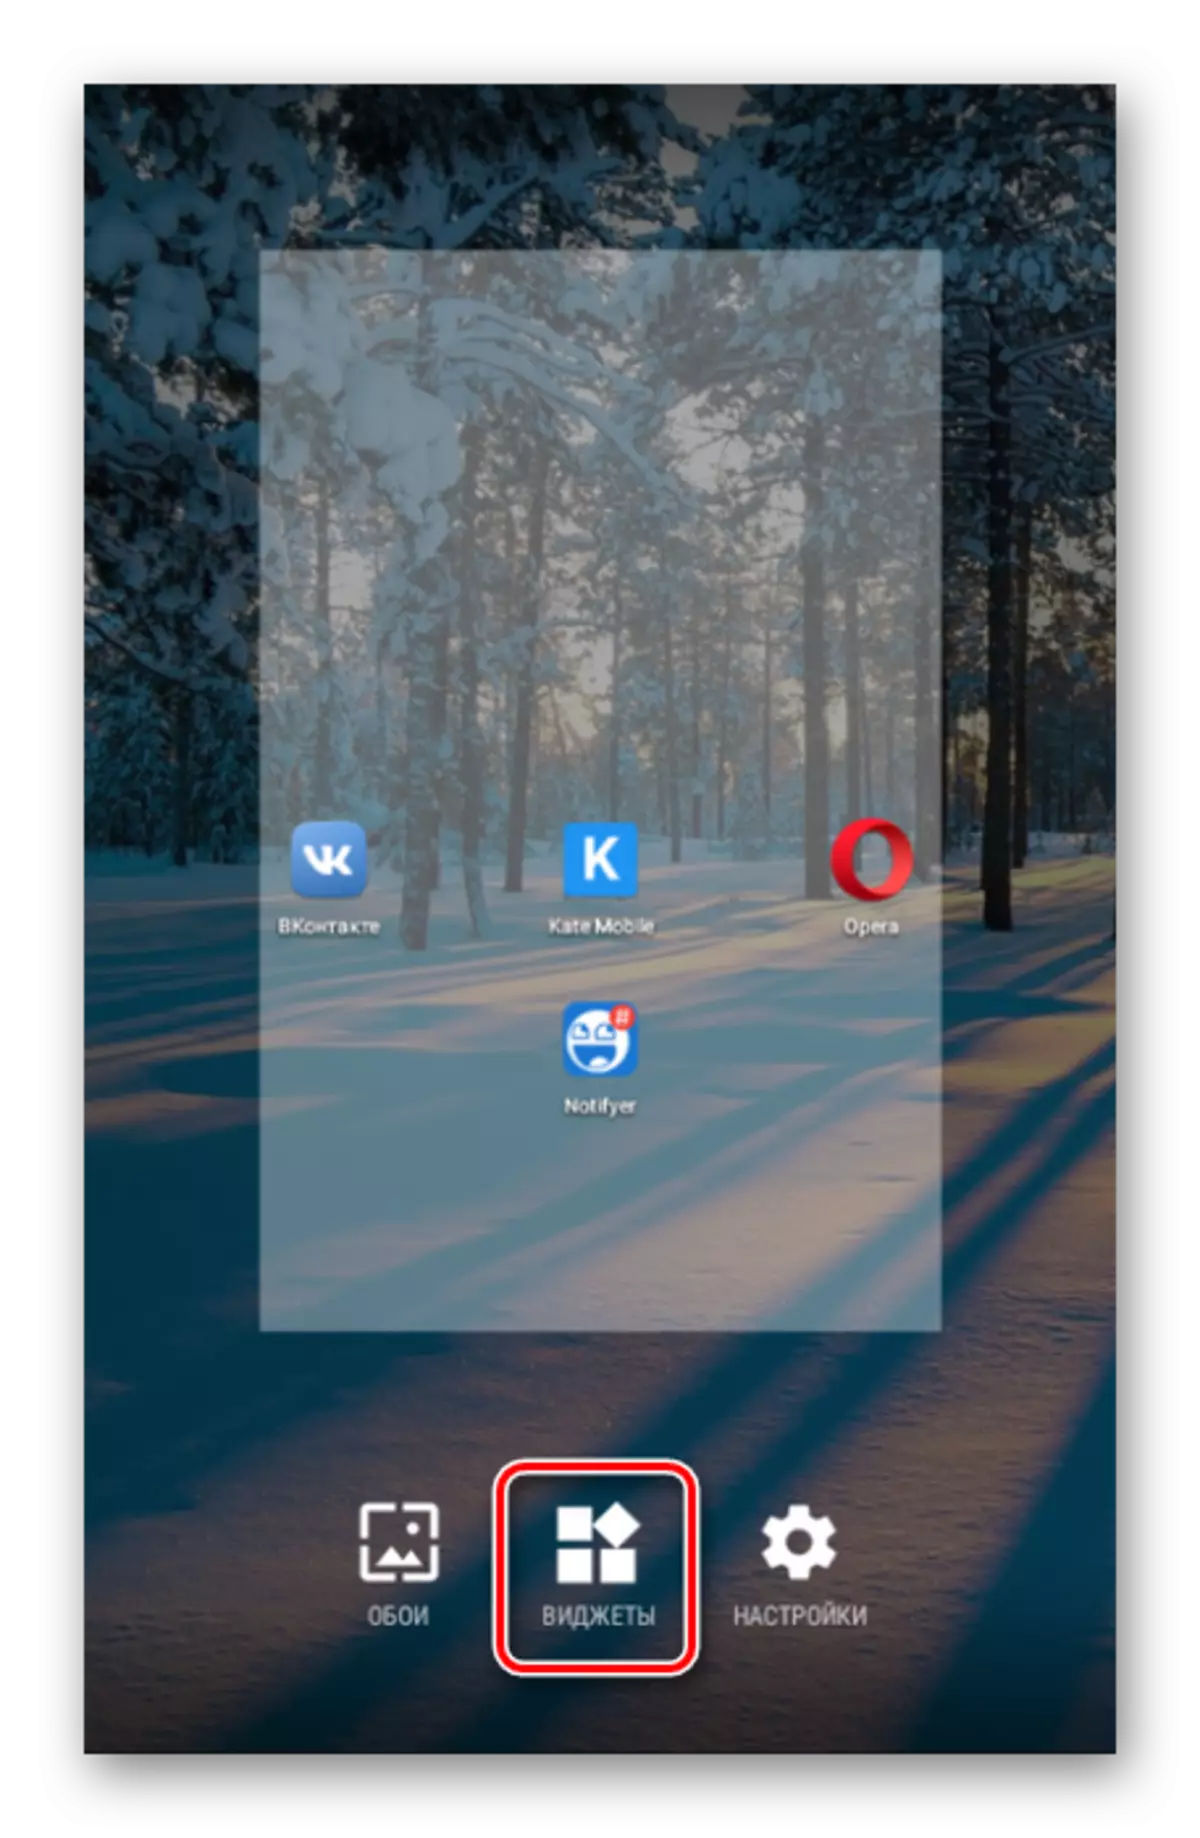 Chuyển đến Widget Window trên Android